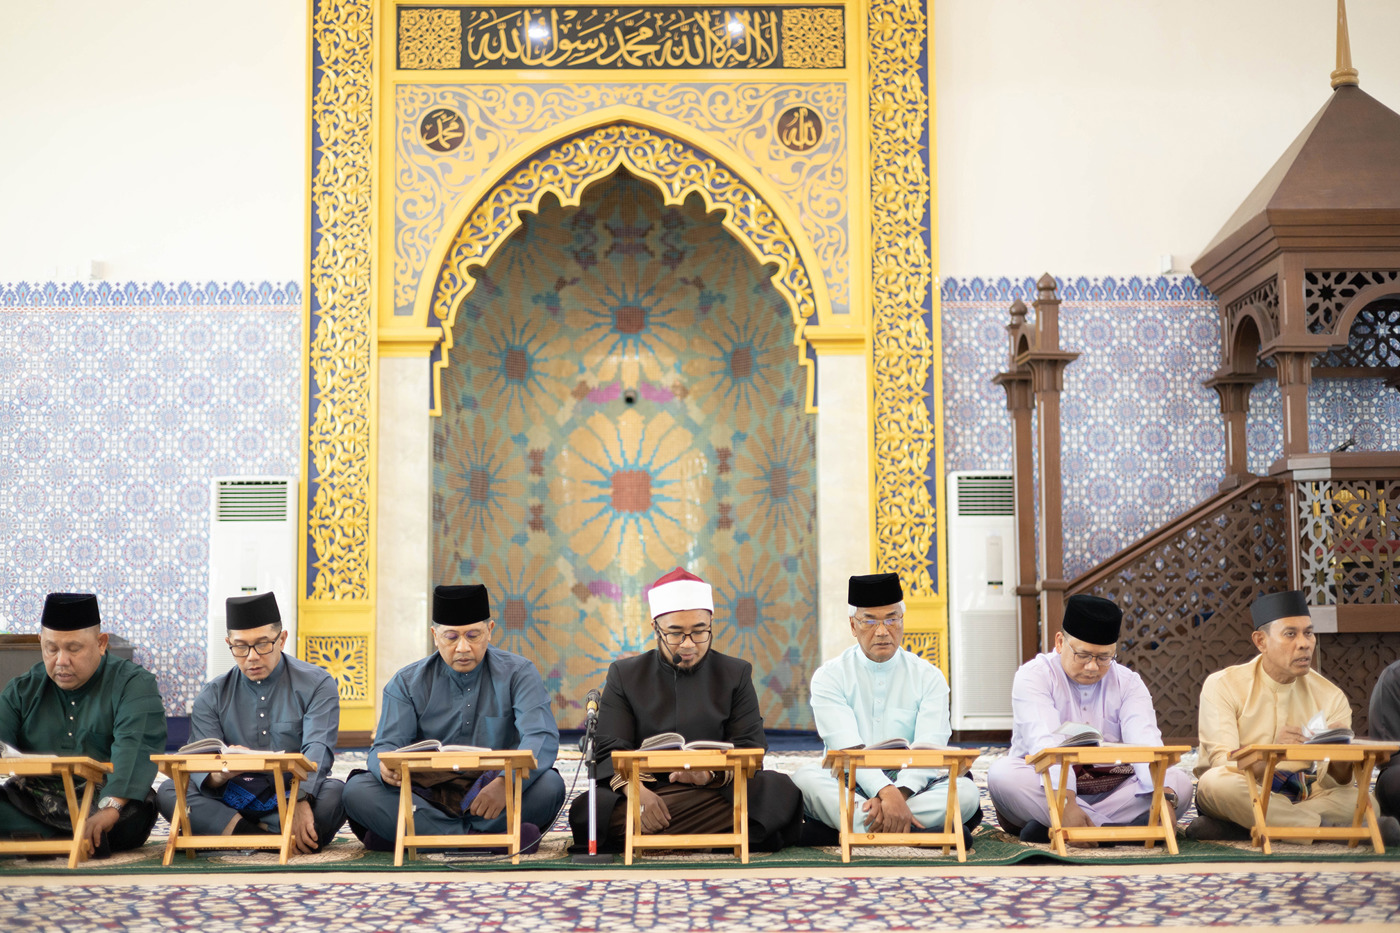 DOA KESYUKURAN - Brunei Religious Officers Student Association